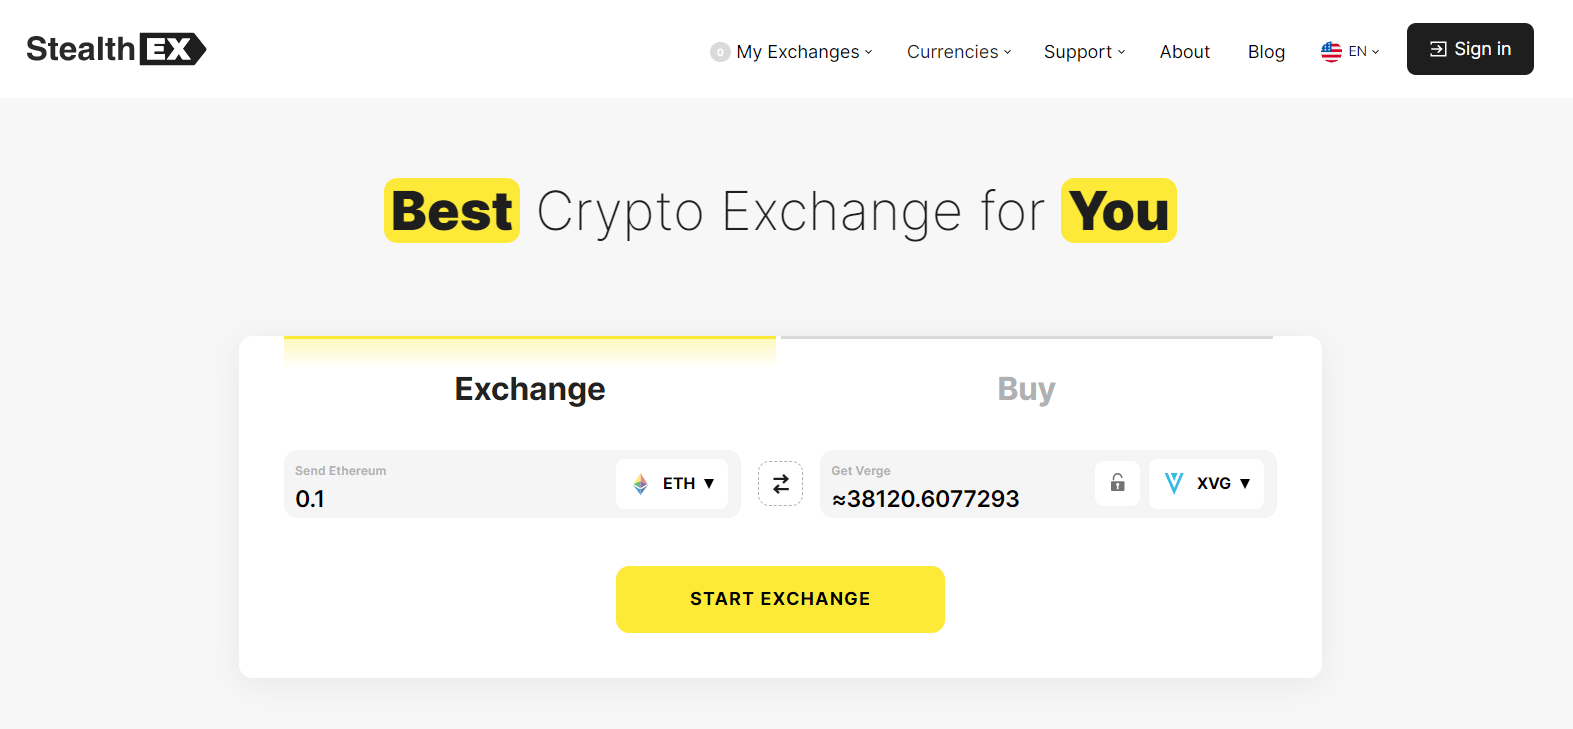 where to buy xvg crypto